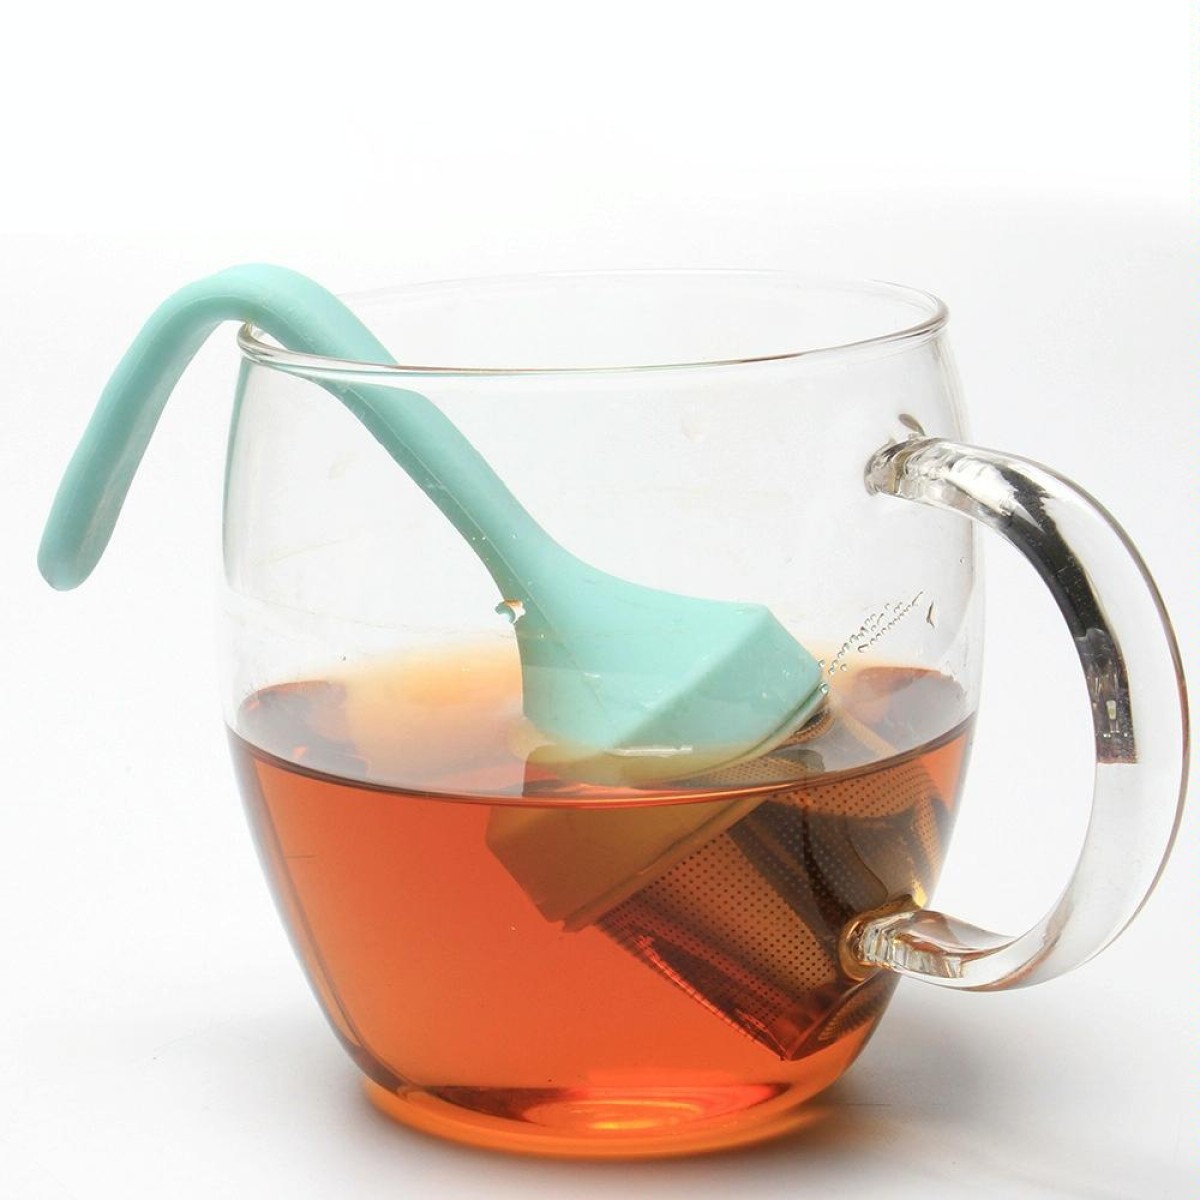 Flexible Silicone Tea Infuser Food Grade Tea Strainer